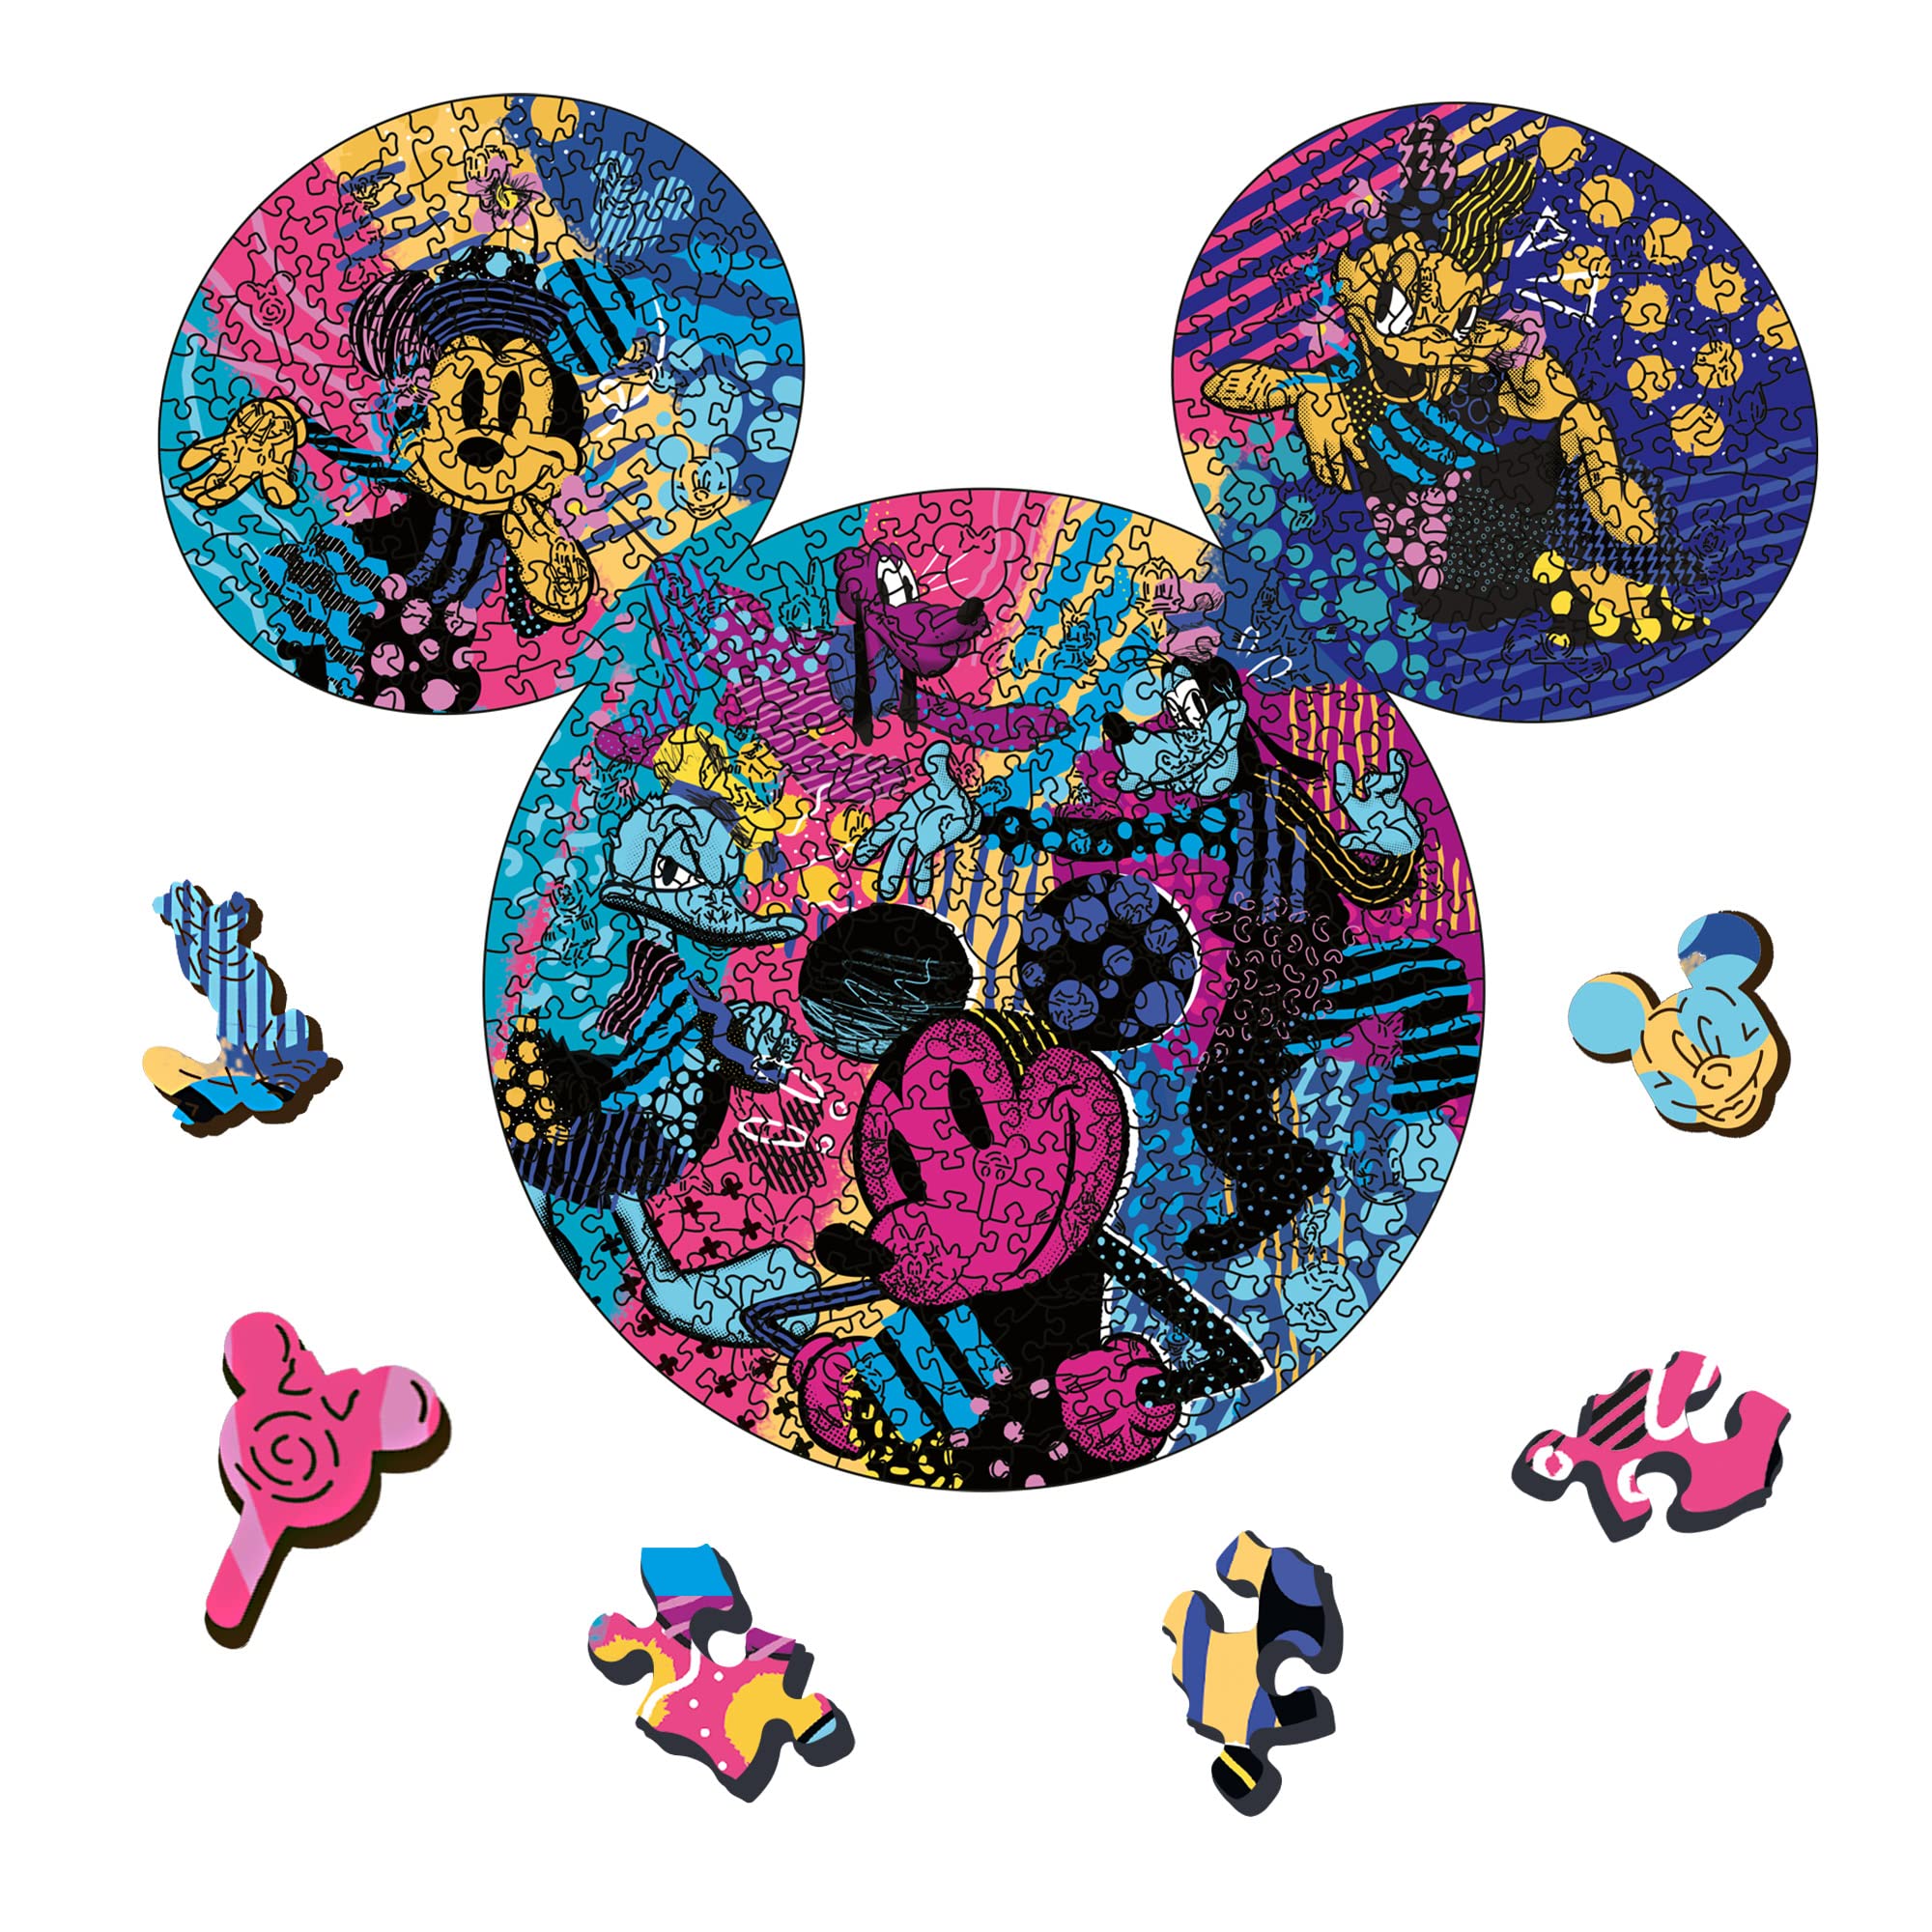 Holz Puzzle Sonderform 500 + 5 - Mickey Mouse